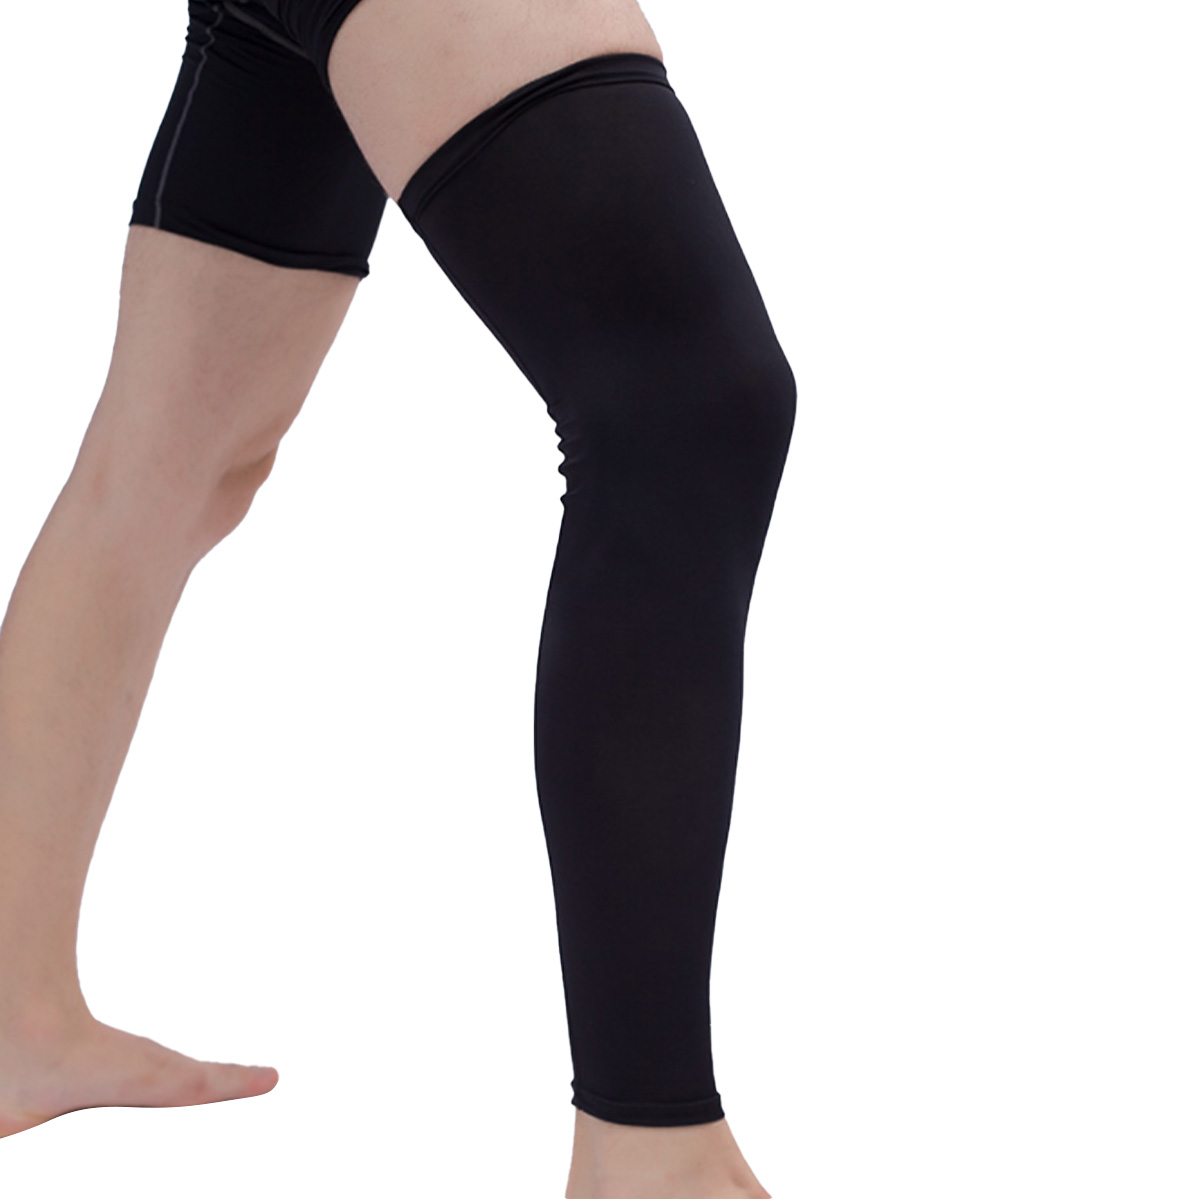 Polyester Long Sports Leg Sleeve Knee Guard